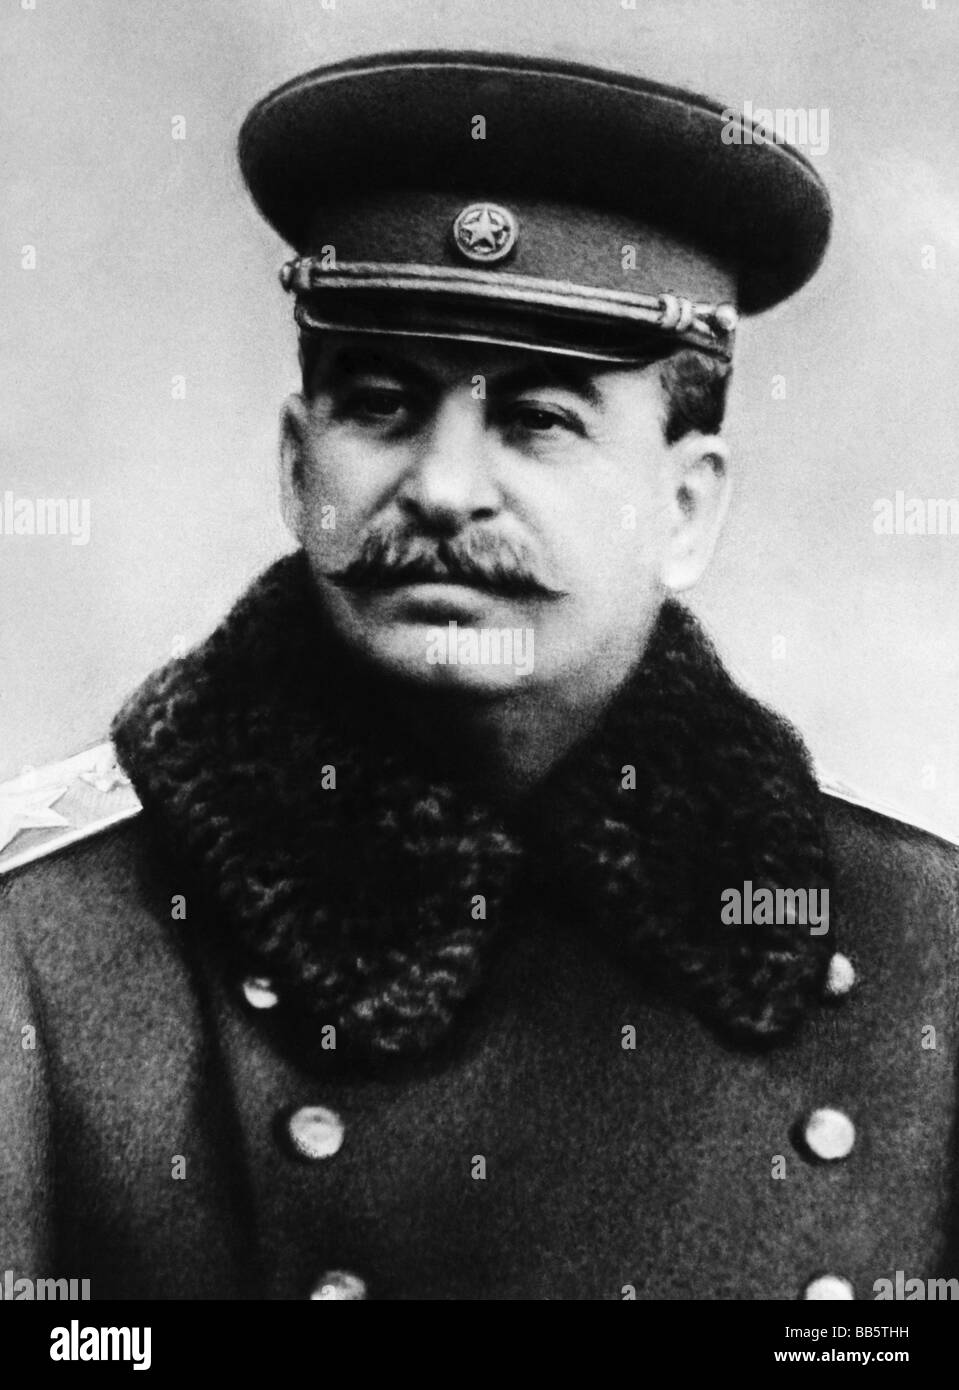 Stalin (Joseph Vissarionovich Dzhugashvili), 21.12.1879 - 5.3.1953, Soviet politician, General Secretary of the Communist Party of the Soviet Union 3.4.1922 - 5.3.1953, portrait 1940s, Stock Photo